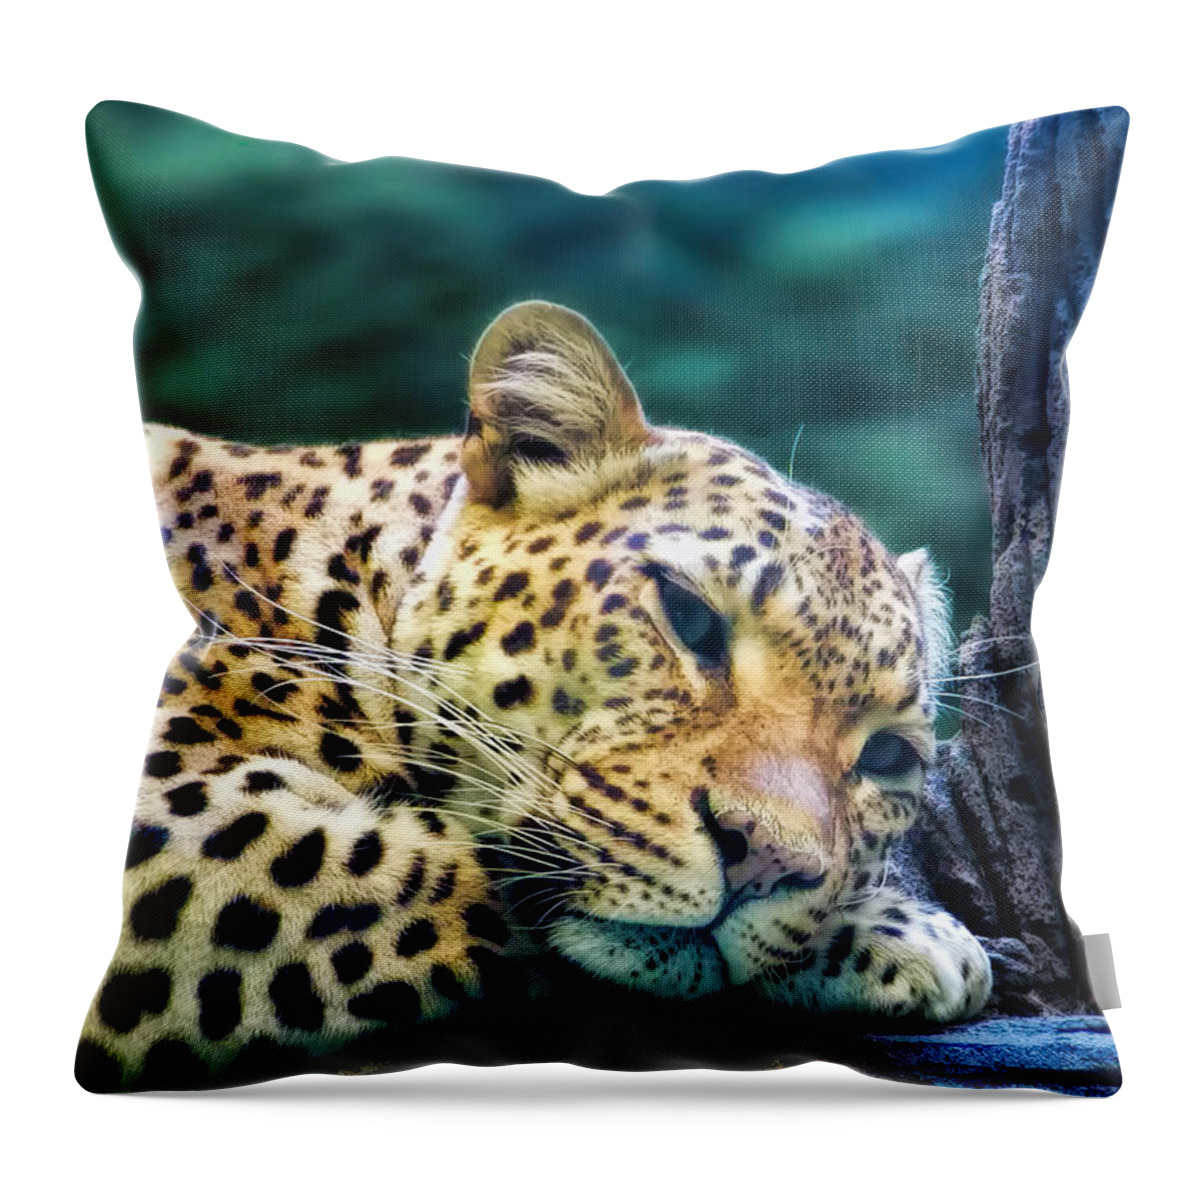 Leopard Throw Pillow featuring the photograph Leopard 1 by Dawn Eshelman